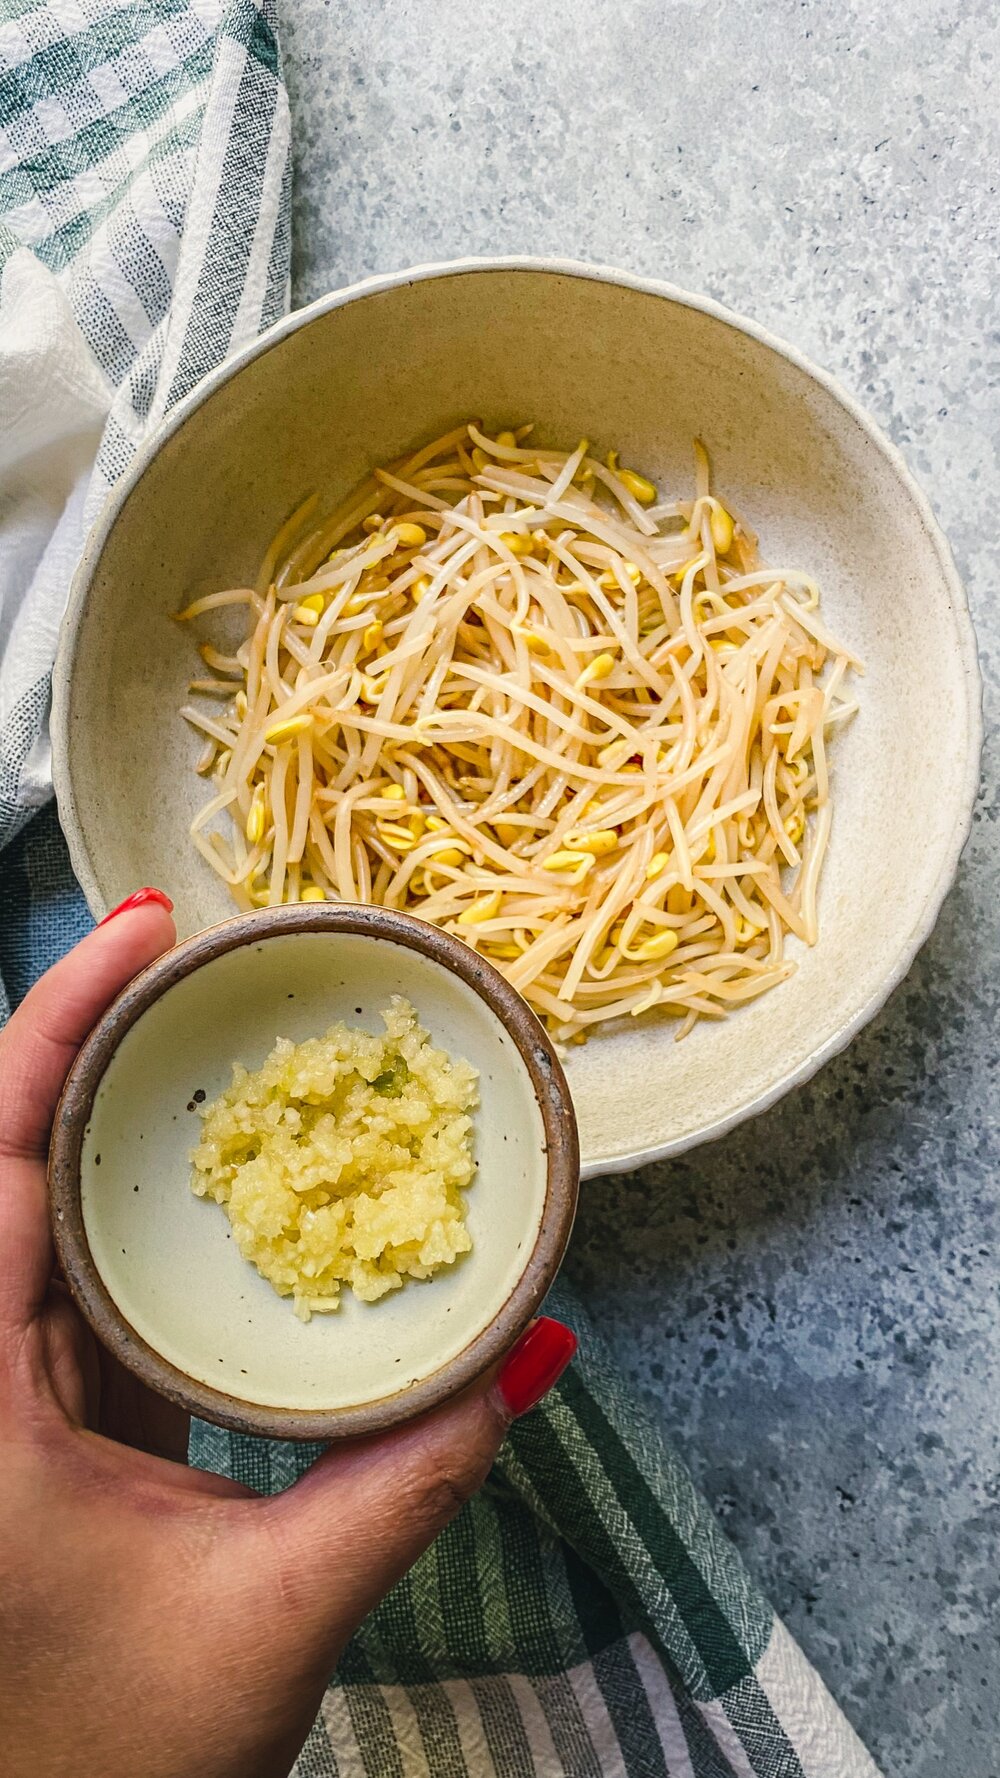 Add 1 clove of grated garlic.